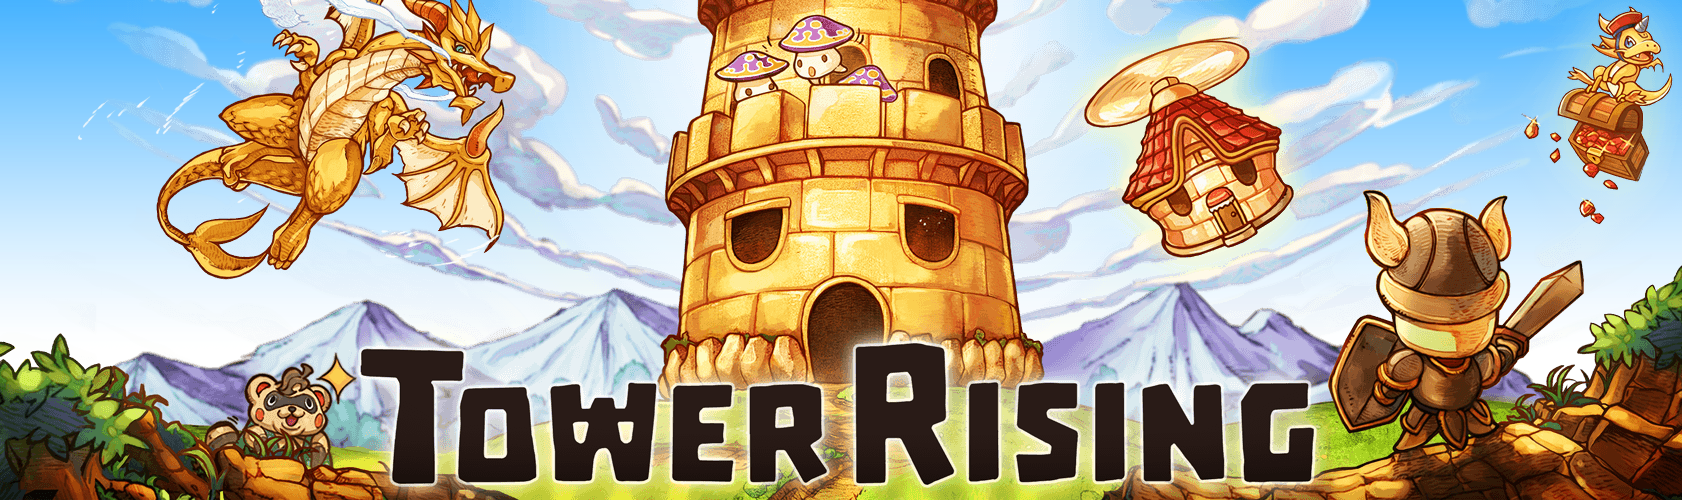 Tower Rising01